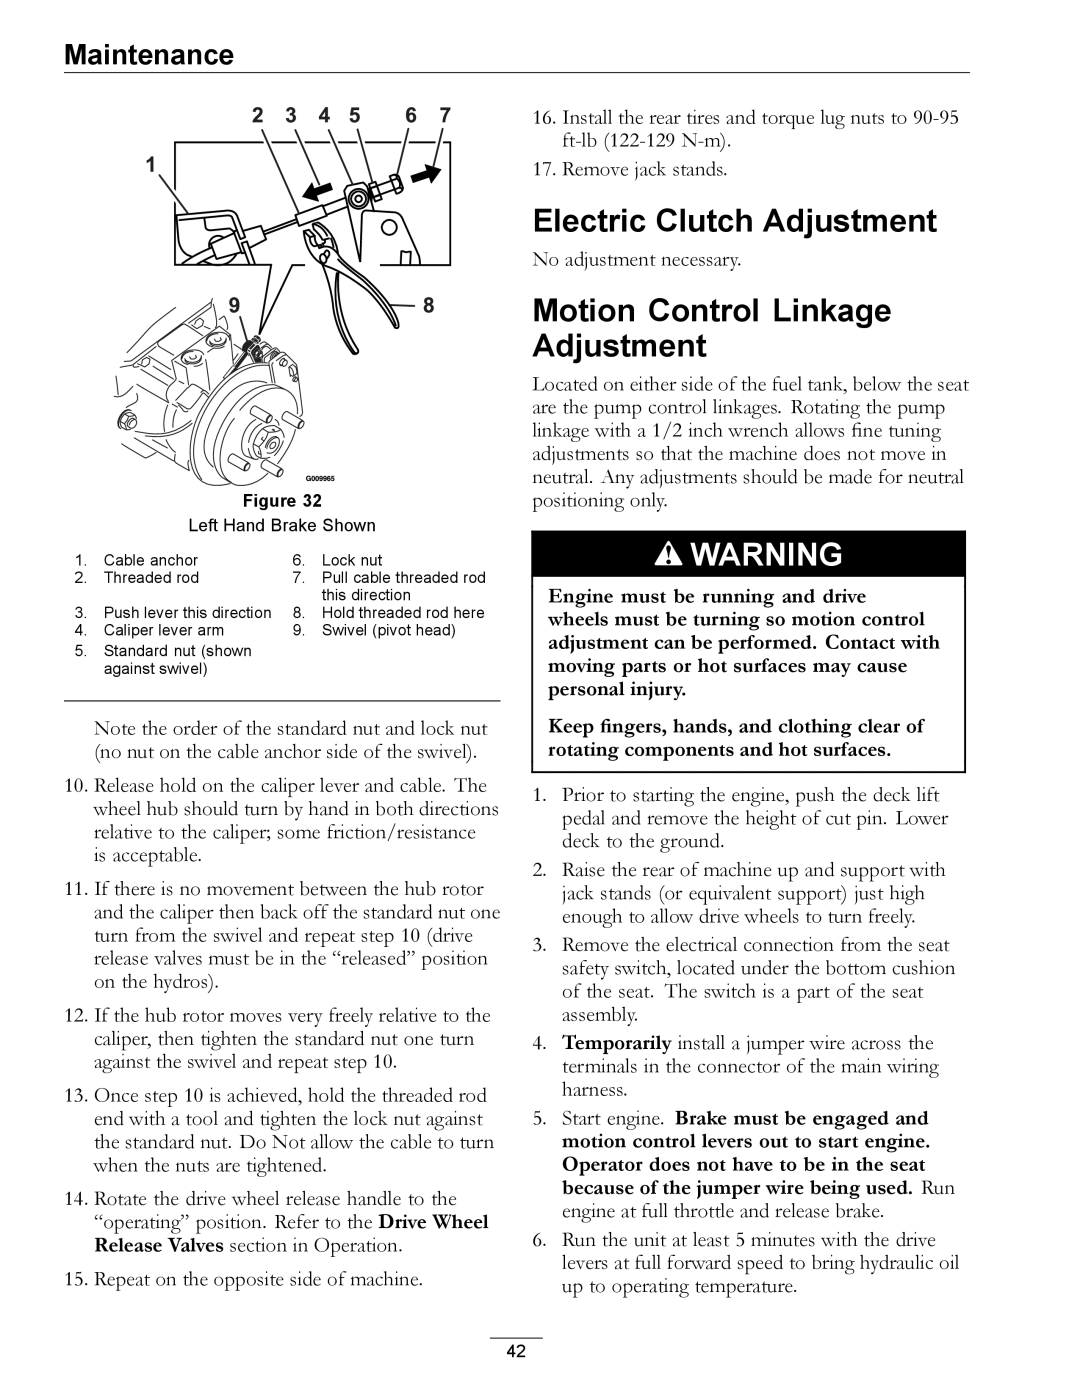 Exmark 4500-466 manual Electric Clutch Adjustment, Motion Control Linkage Adjustment 